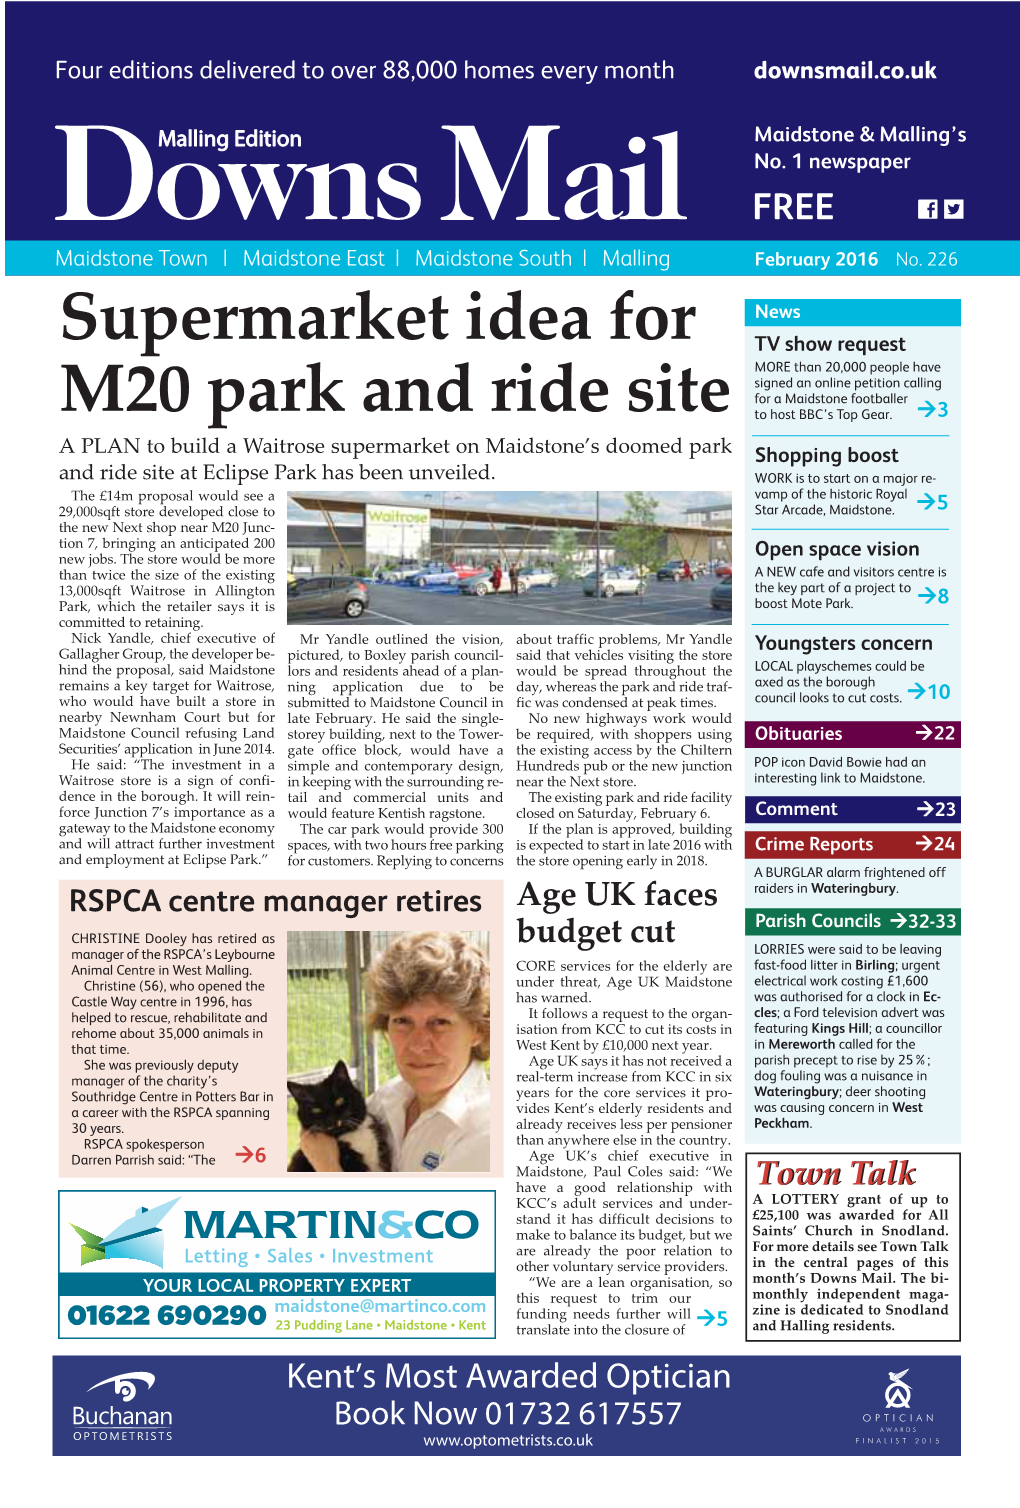 Supermarket Idea for M20 Park and Ride Site